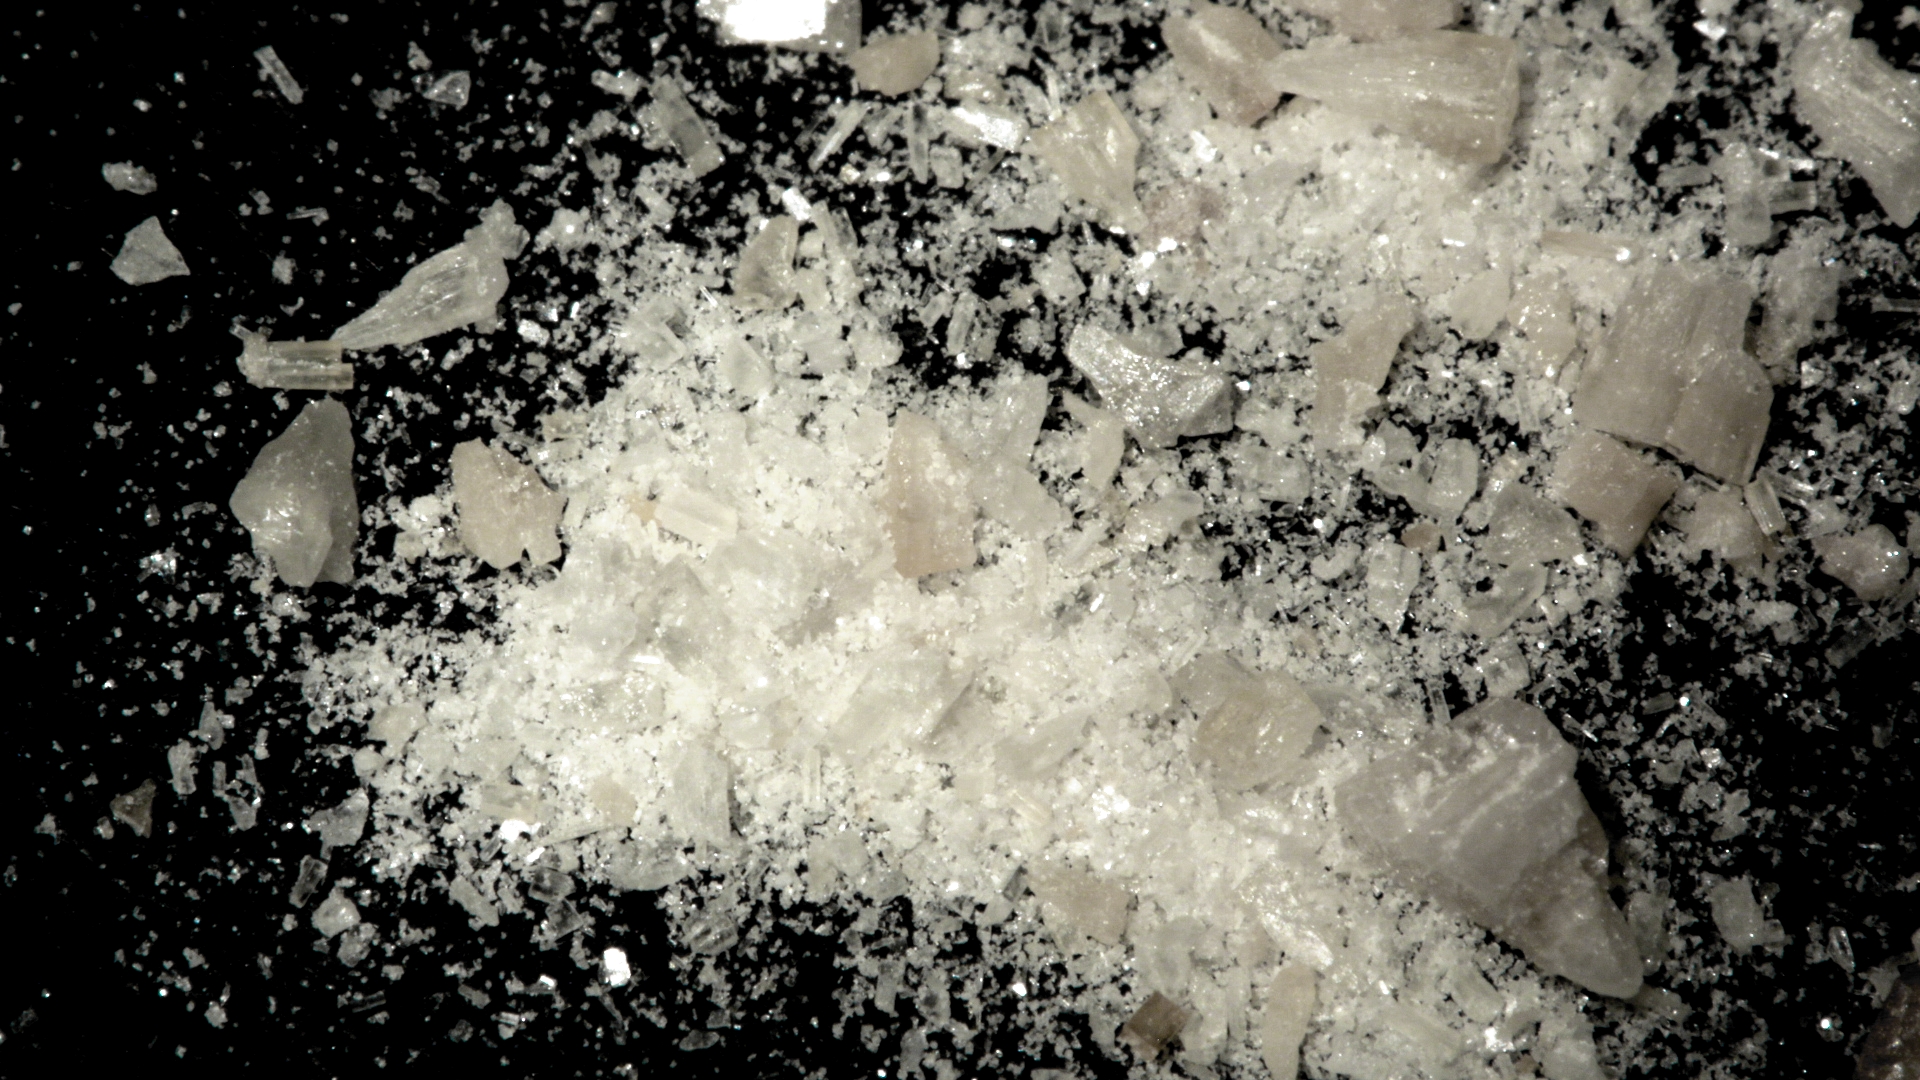 Peroxide crystals